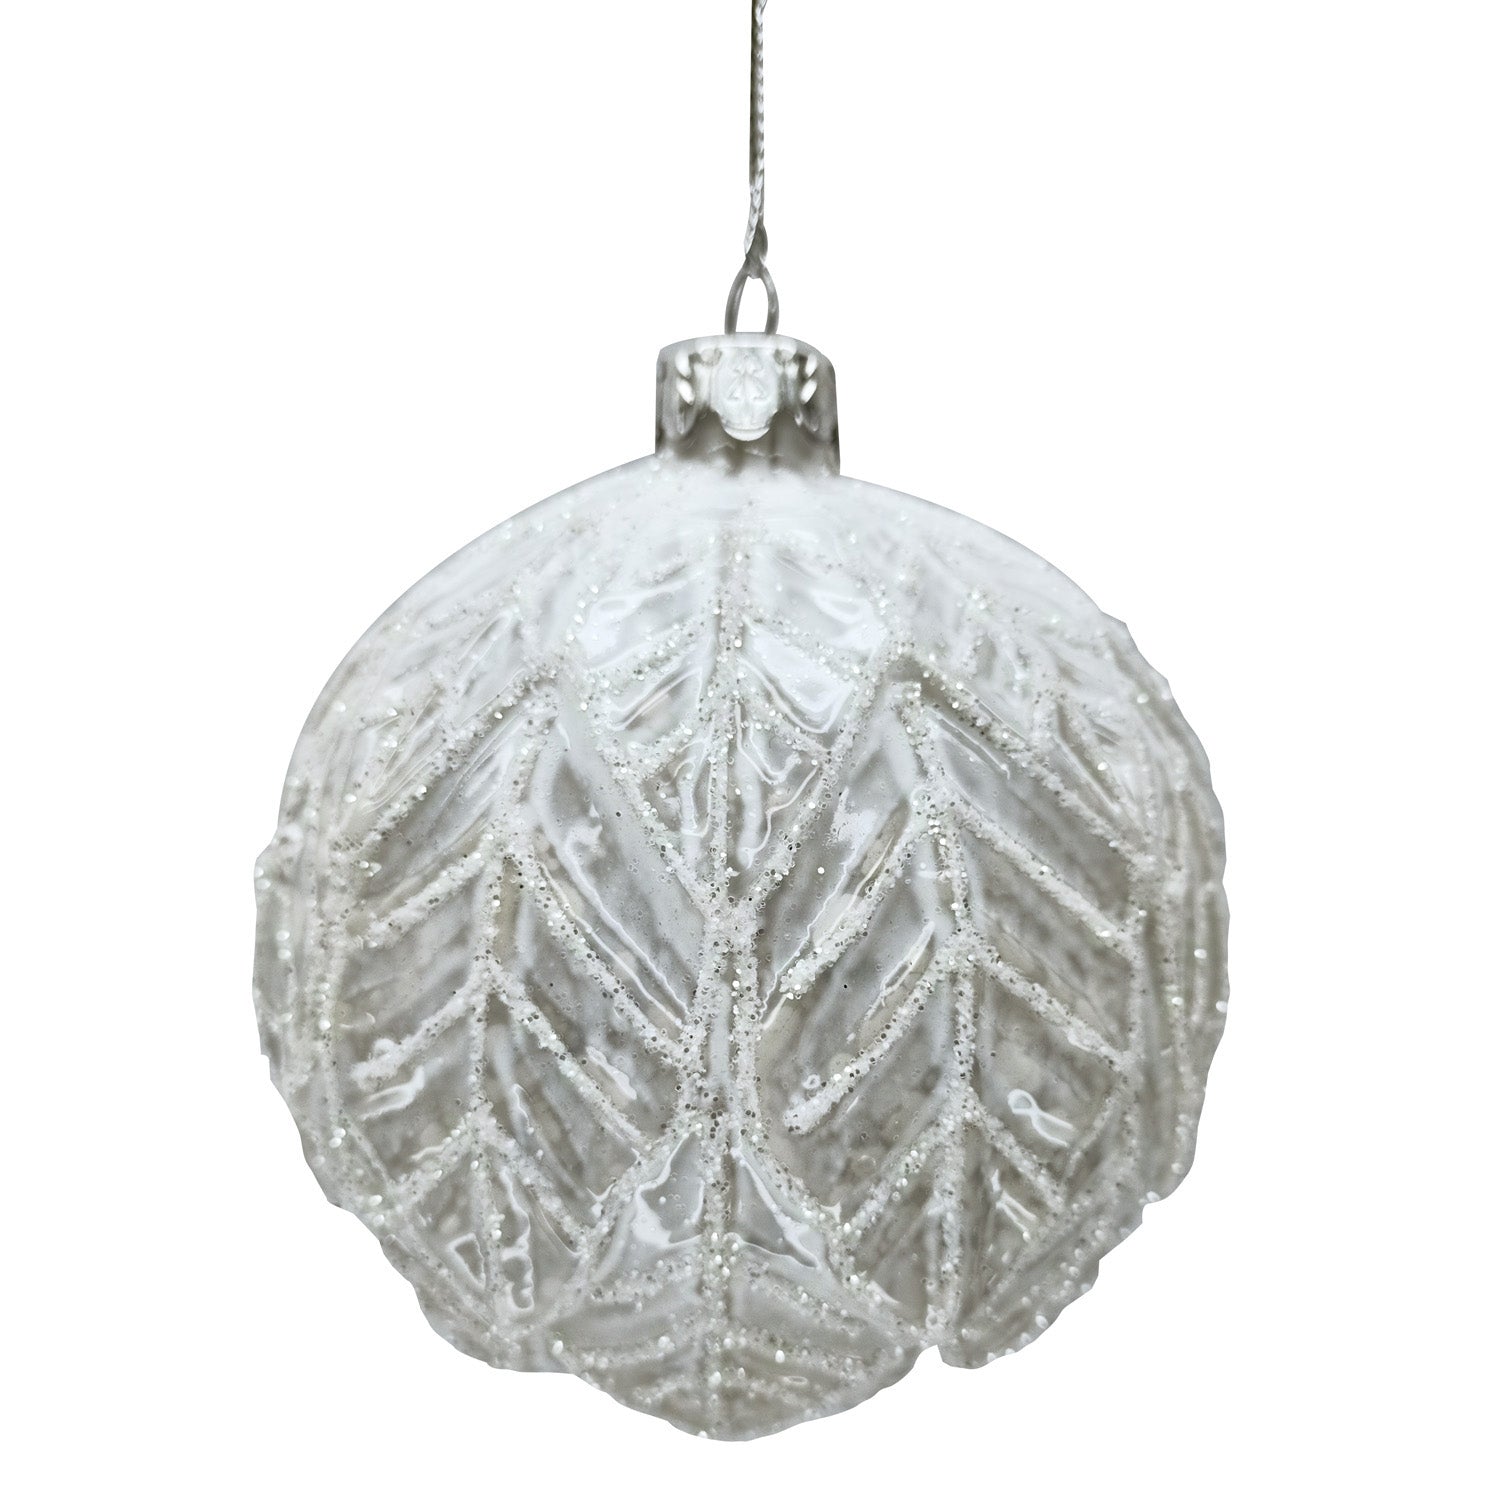 Mottled Silver Moulded Glass Ornament